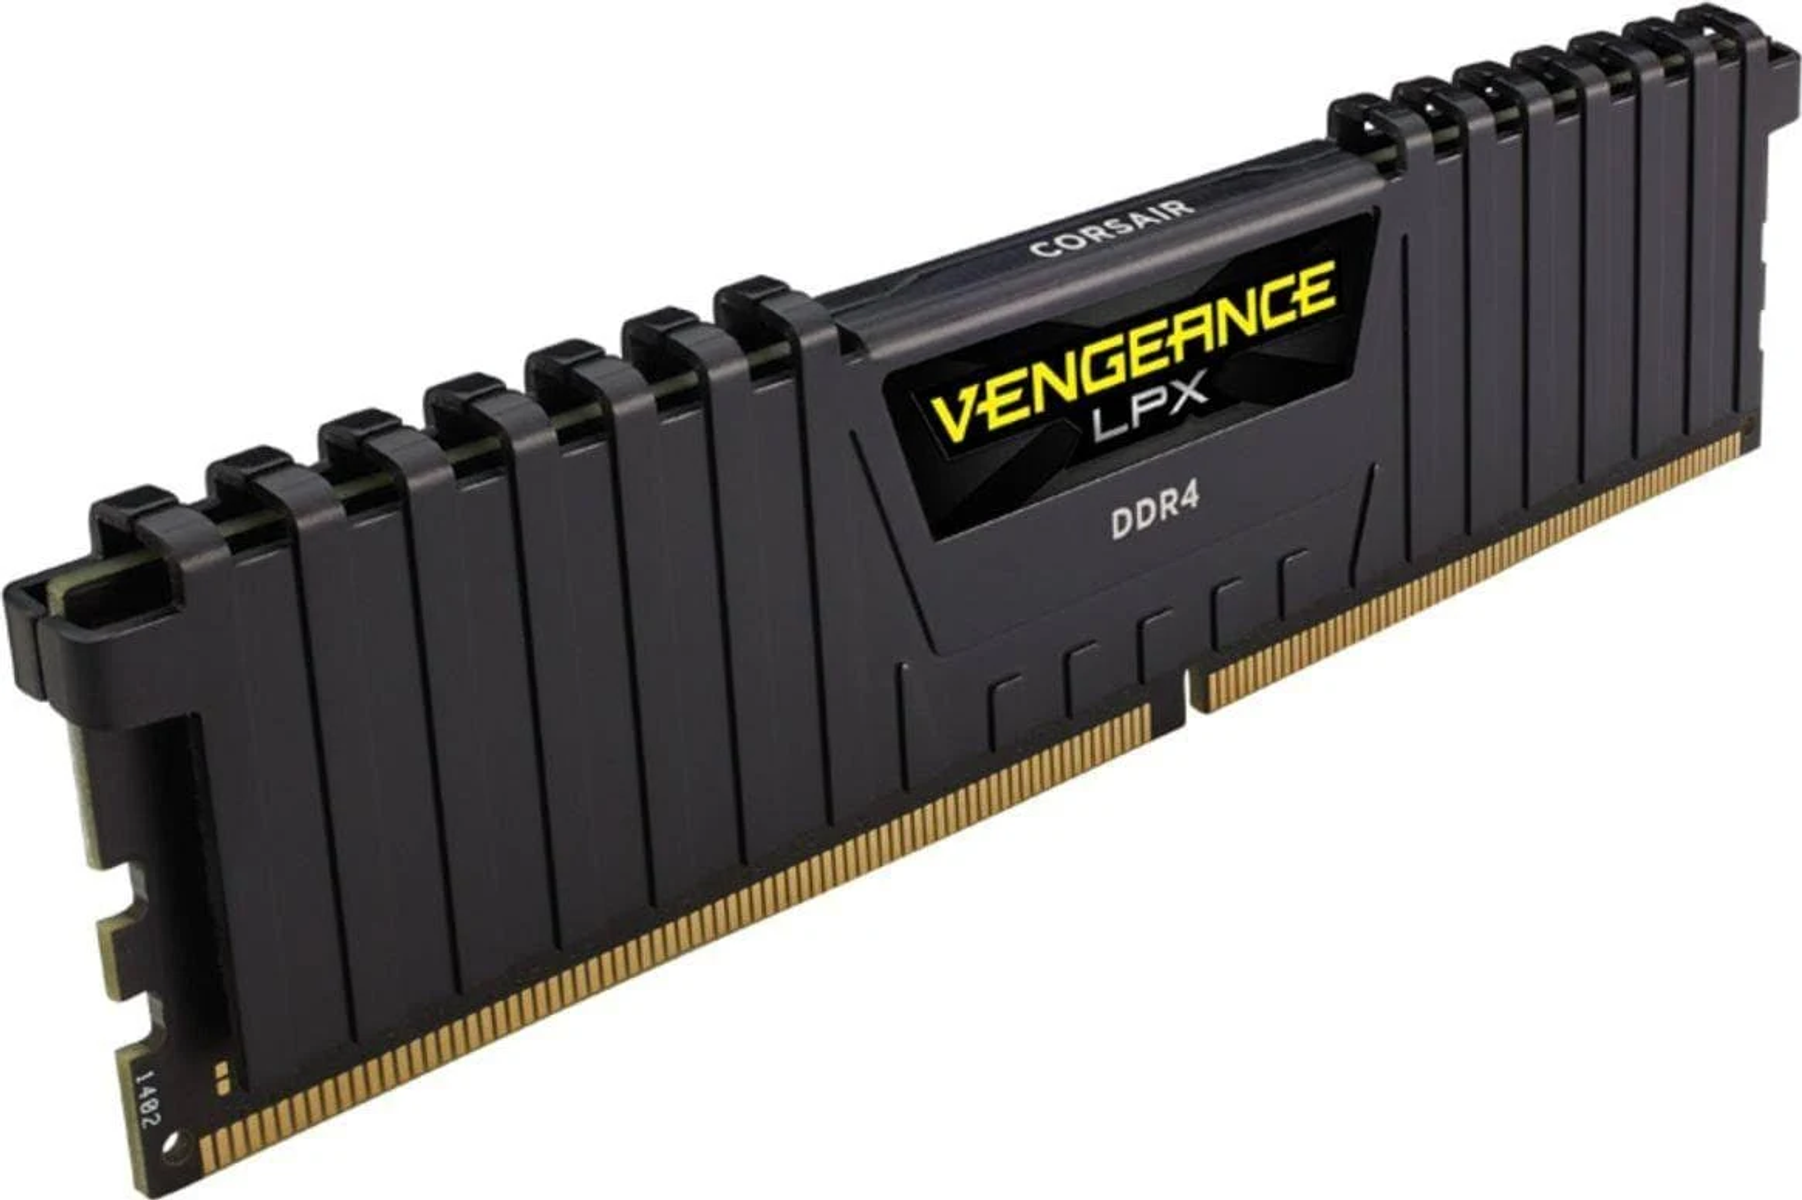 2x16GB;1,35V;VengeanceLPX;black GB DDR4 Arbeitsspeicher Ryzen for 32 CORSAIR AMD